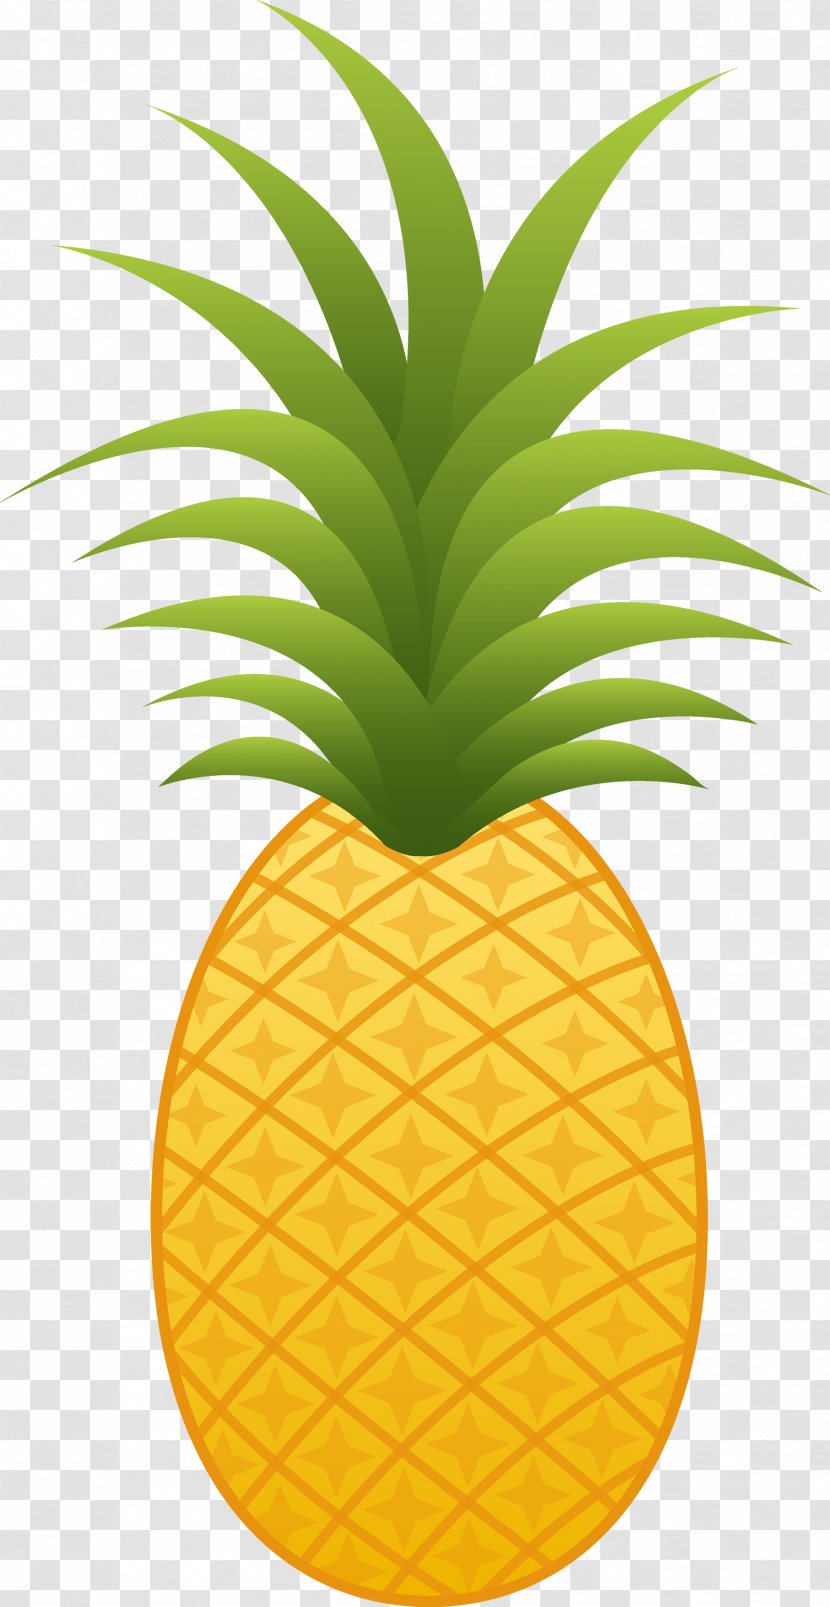 Pineapple Fruit Clip Art - Image File Formats - Image, Free Download Transparent PNG